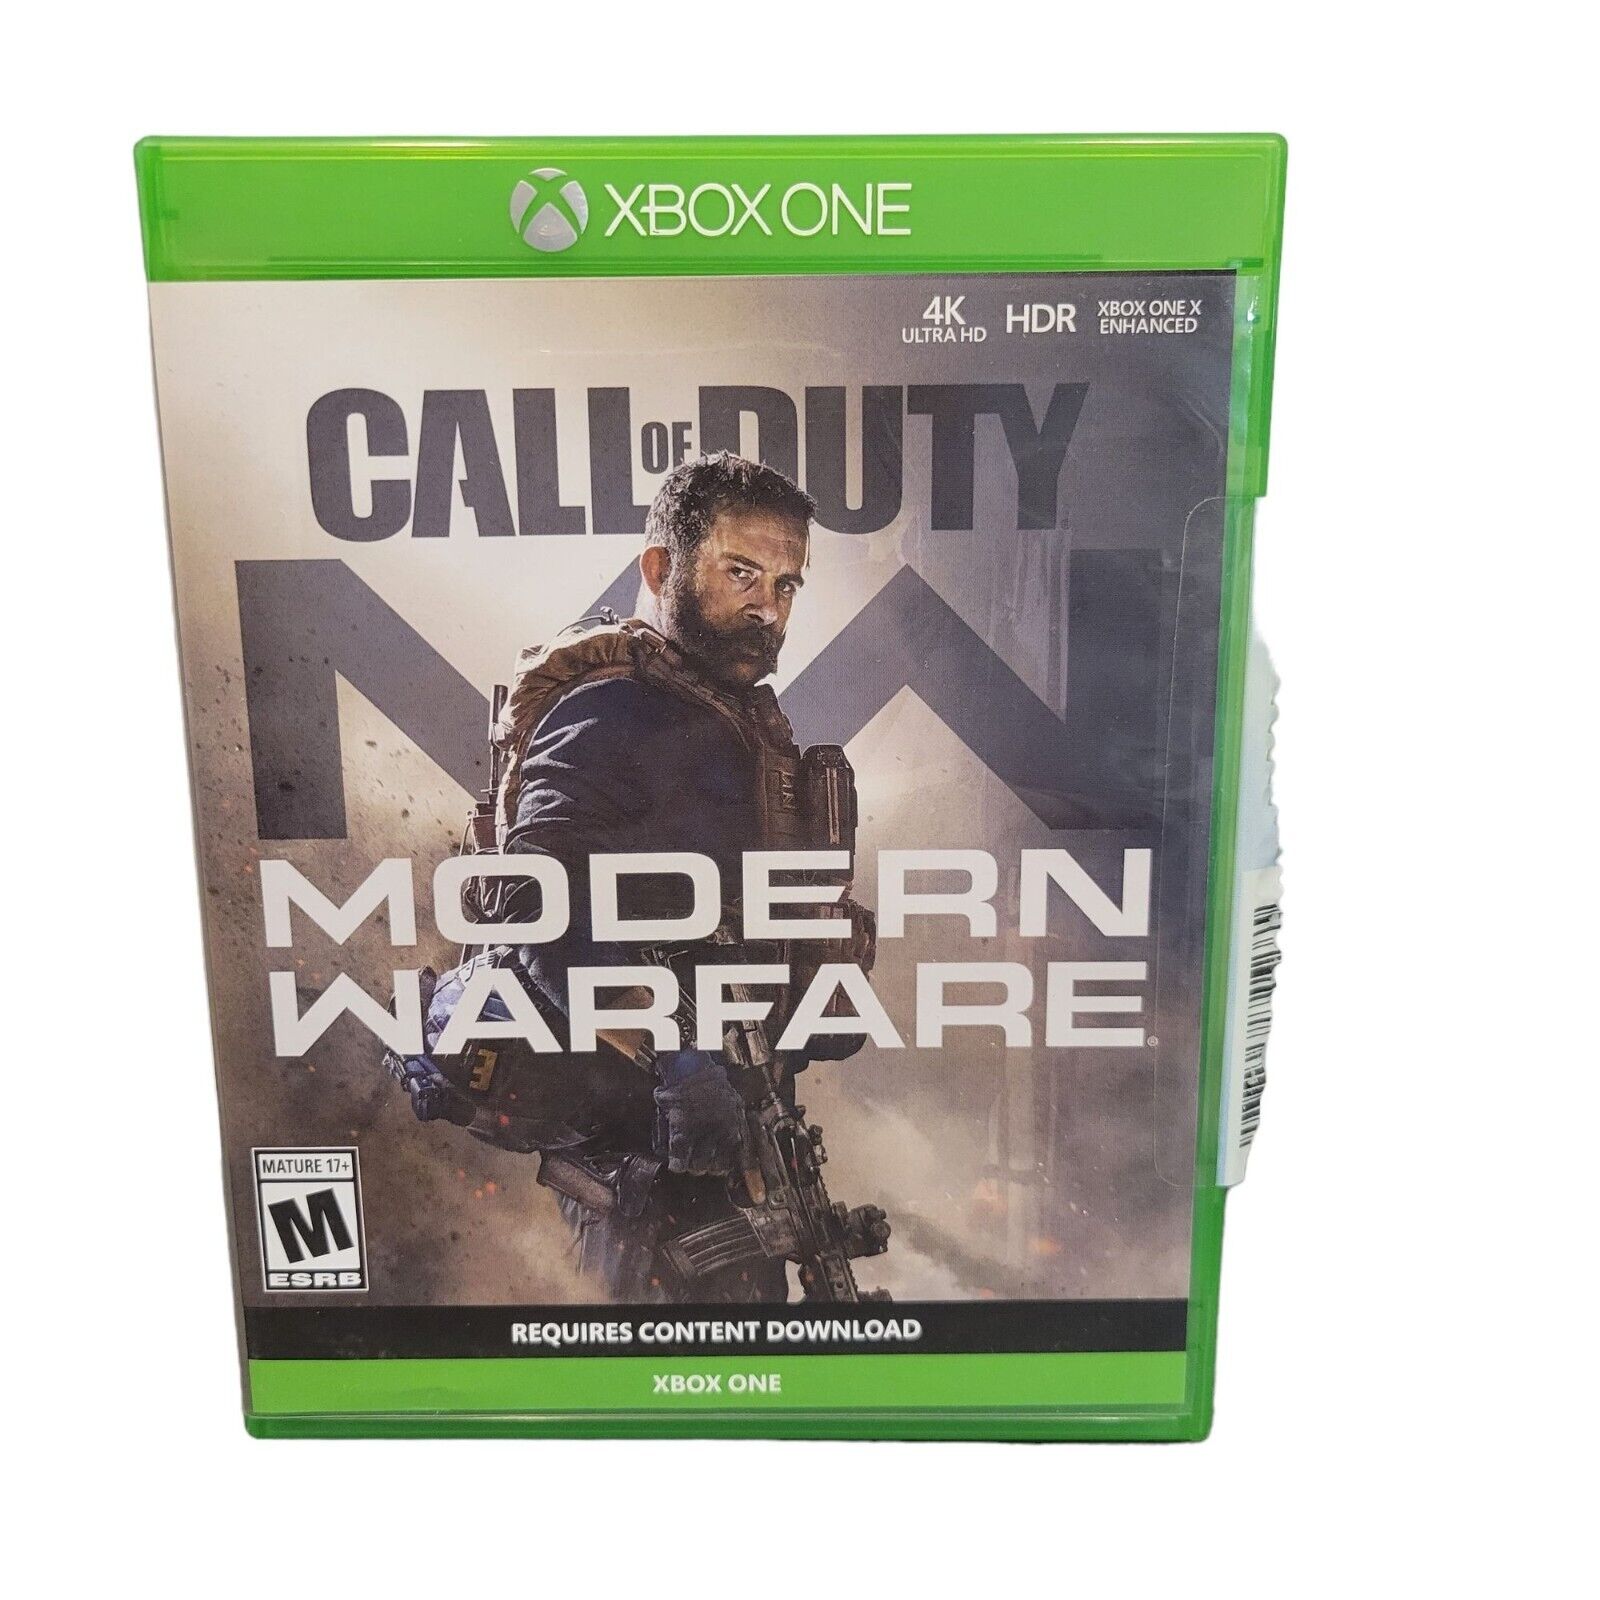 Vervagen Pionier Odysseus Call of Duty Modern Warfare XBOX ONE Disc Only | eBay